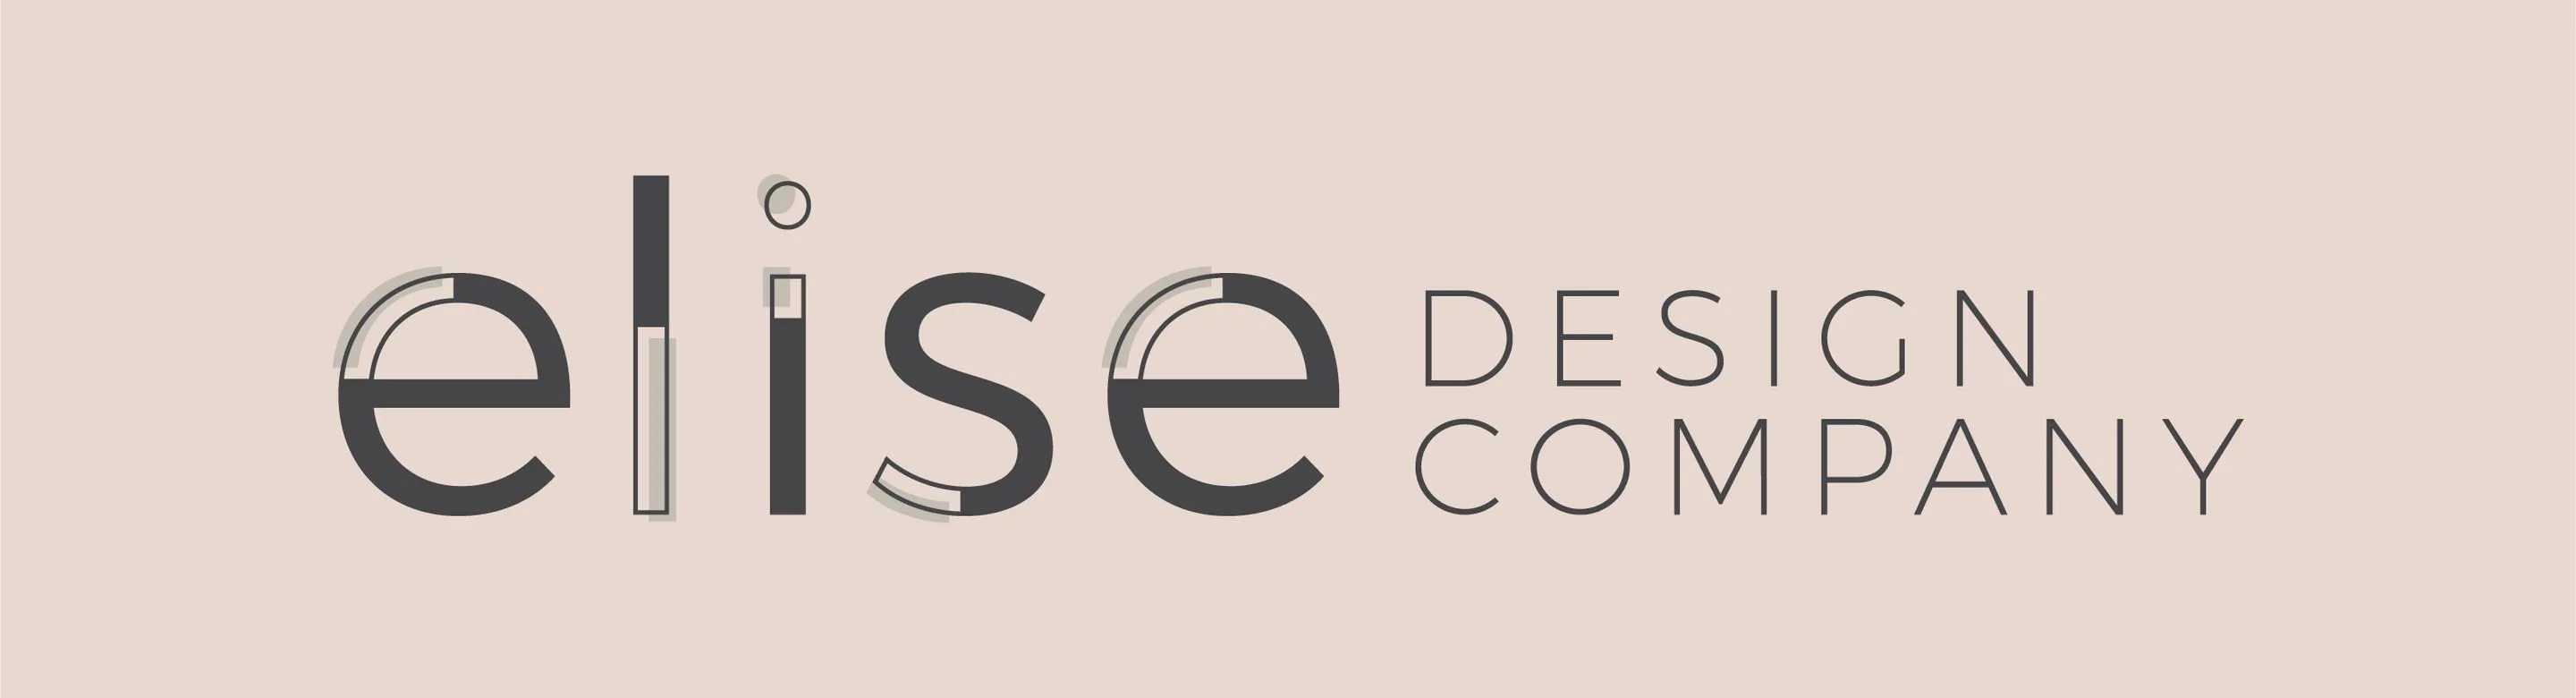 Elise Design Company